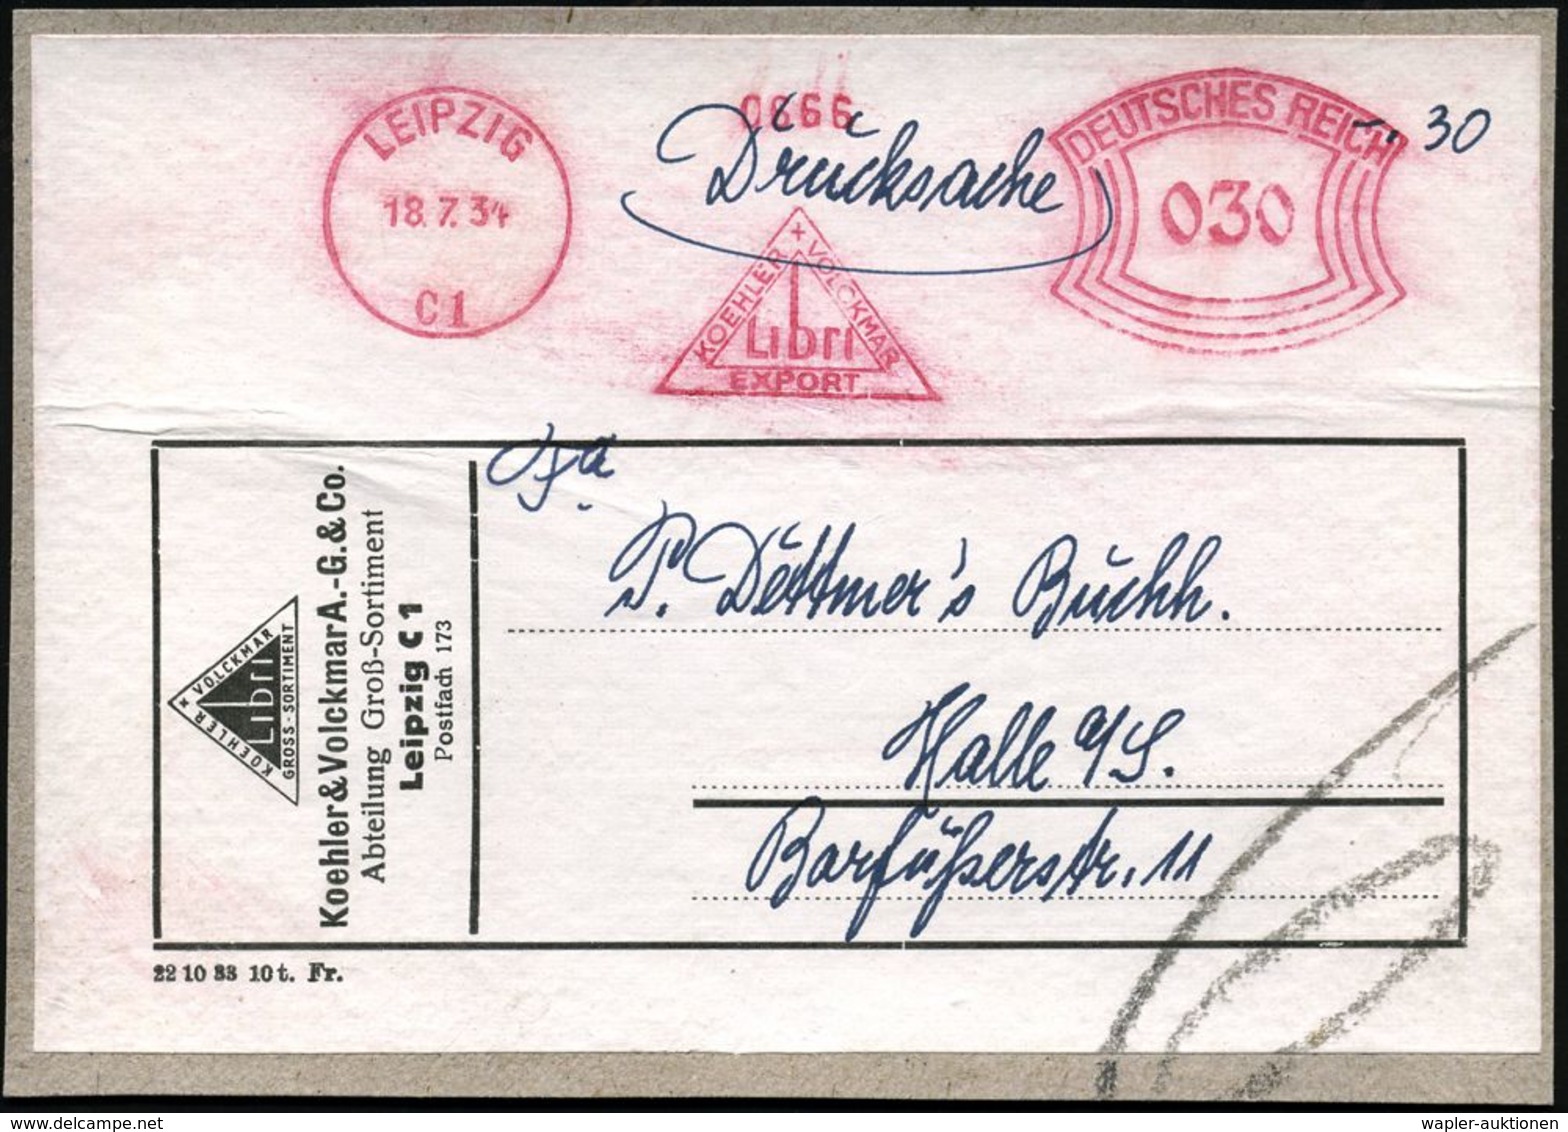 LEIPZIG/ C 1/ KOEHLER/ VOLCKMAR/ Libri/ EXPORT 1934 (18.7.) AFS 030 Pf. (Logo) Motivgl. Adreß-Aufkleber = Inl.-Drs., Höc - Unclassified